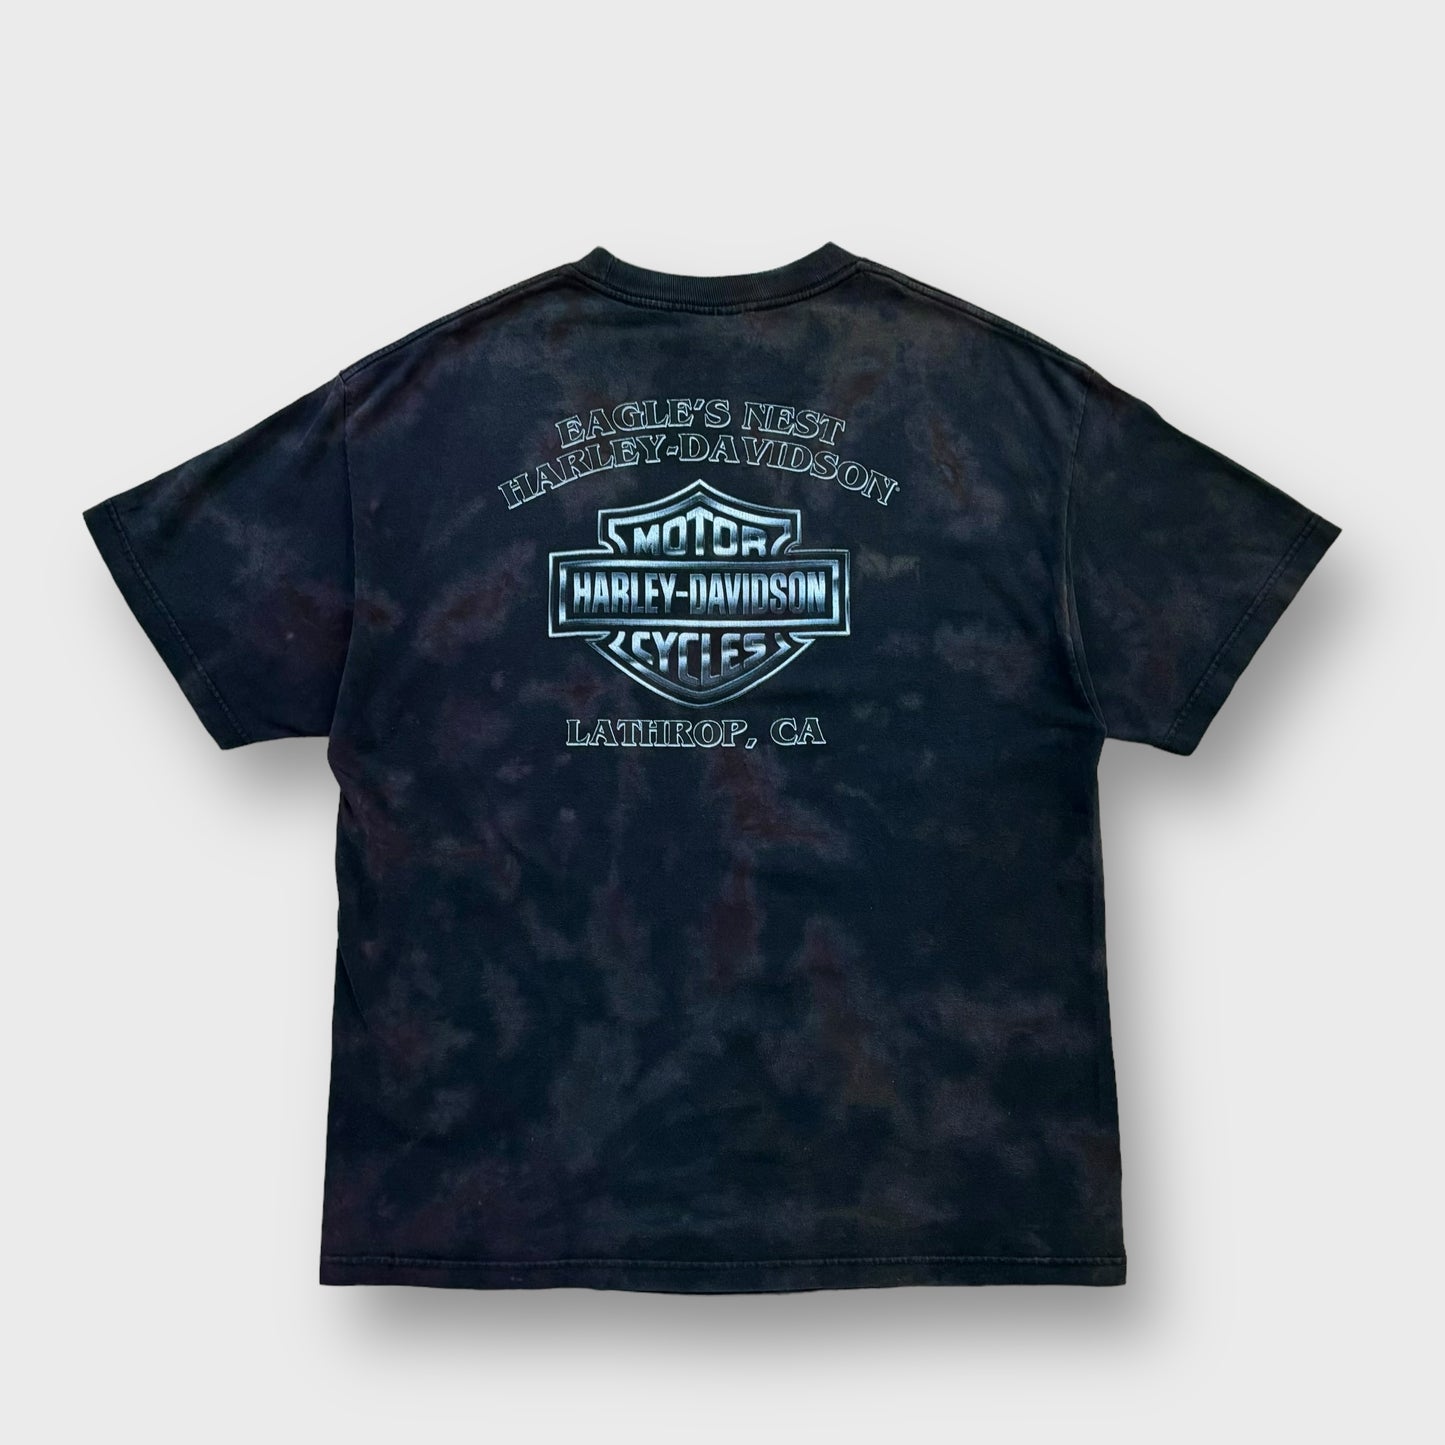 "Harley-Davidson" design t-shirt